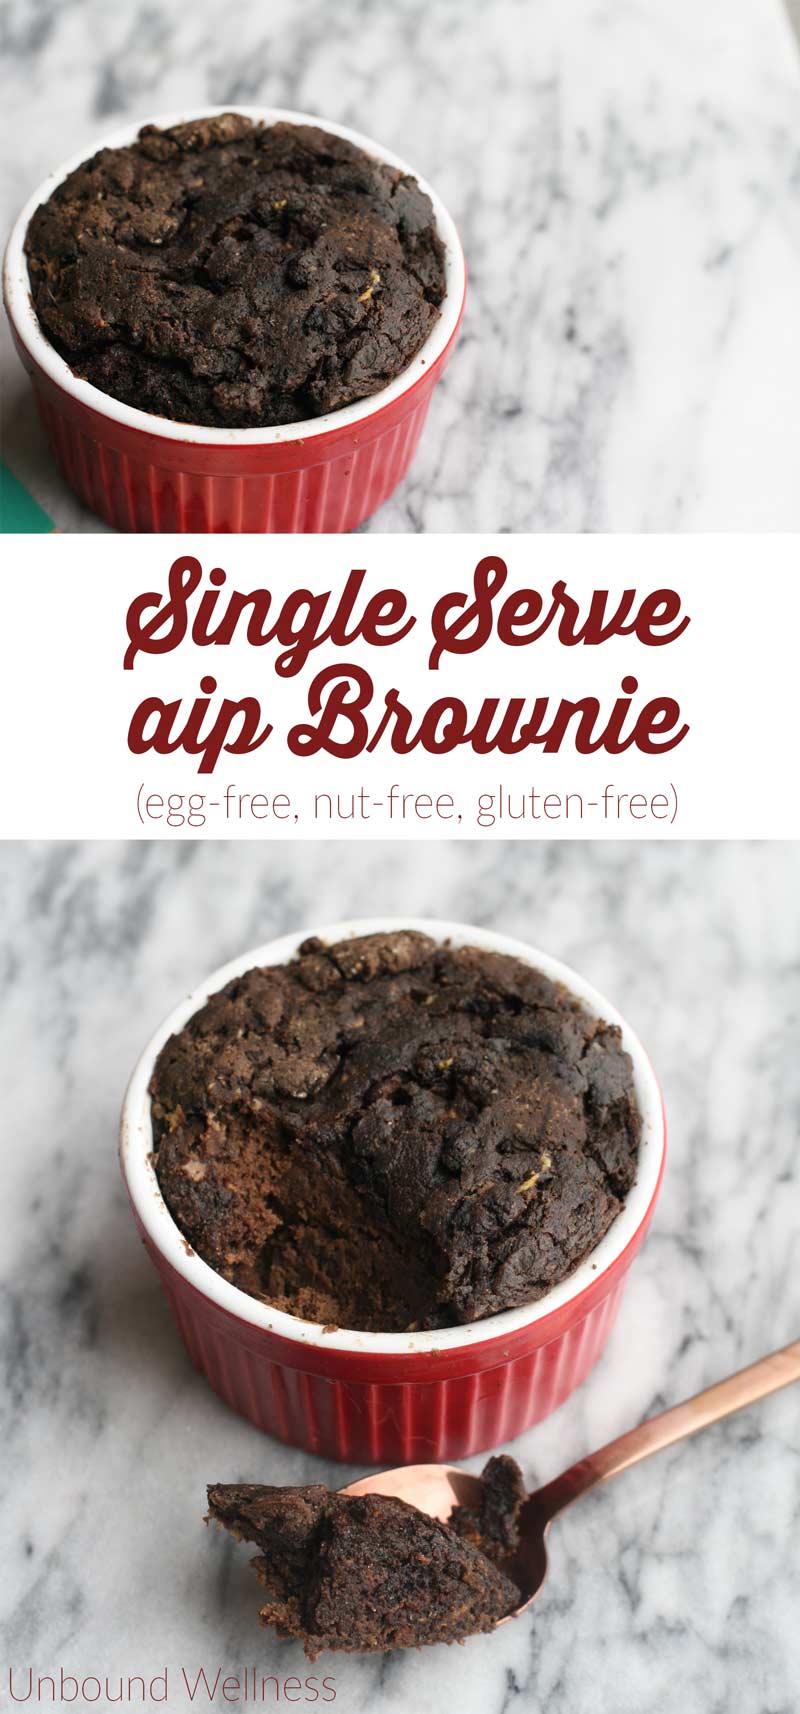 Single Serve AIP Brownie (Egg-free, nut-free, gluten-free)